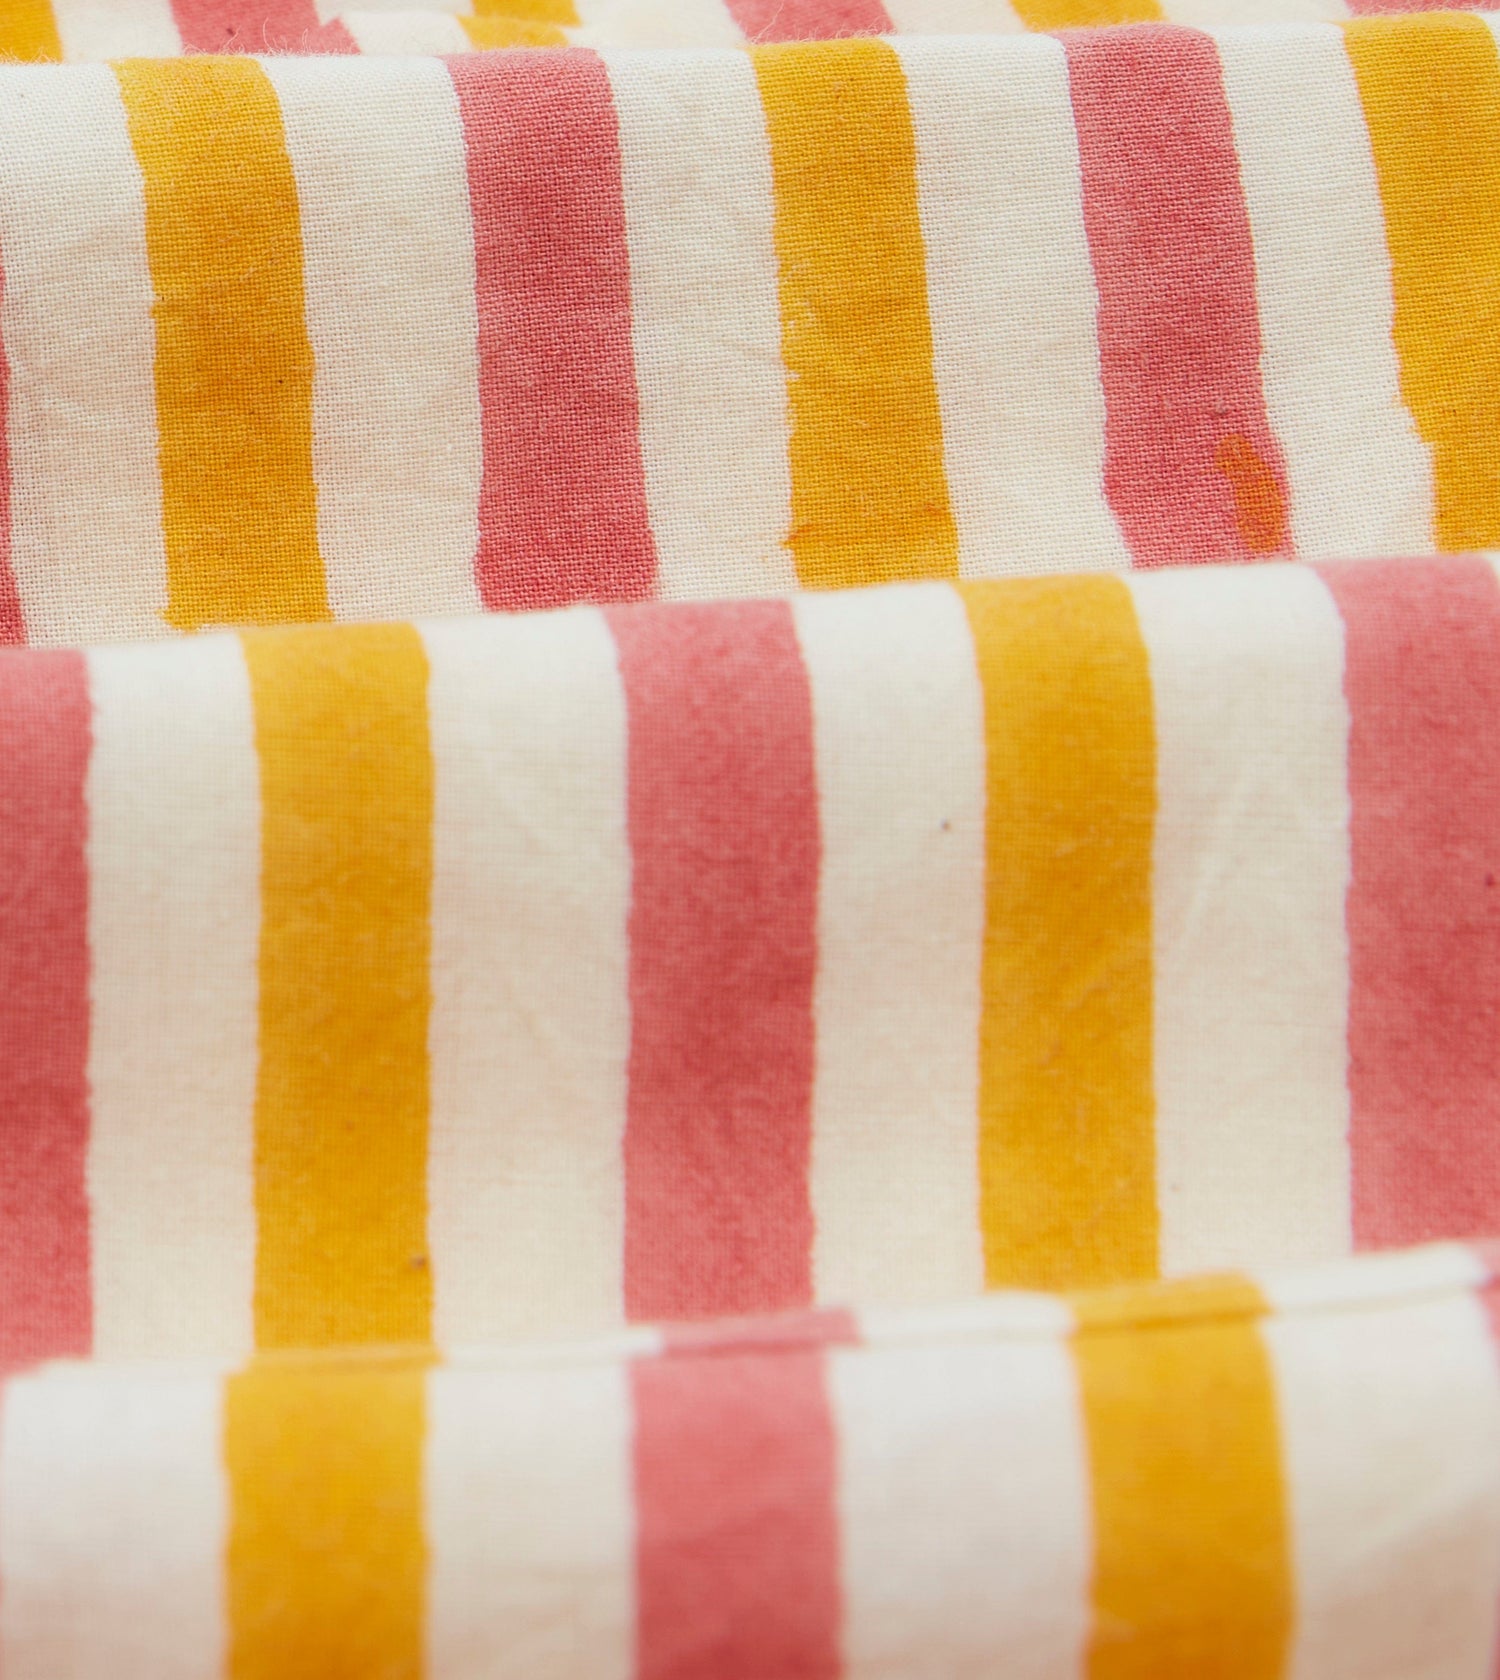 Yellow and Pink Stripe Block Print Cotton Drawstring Shorts